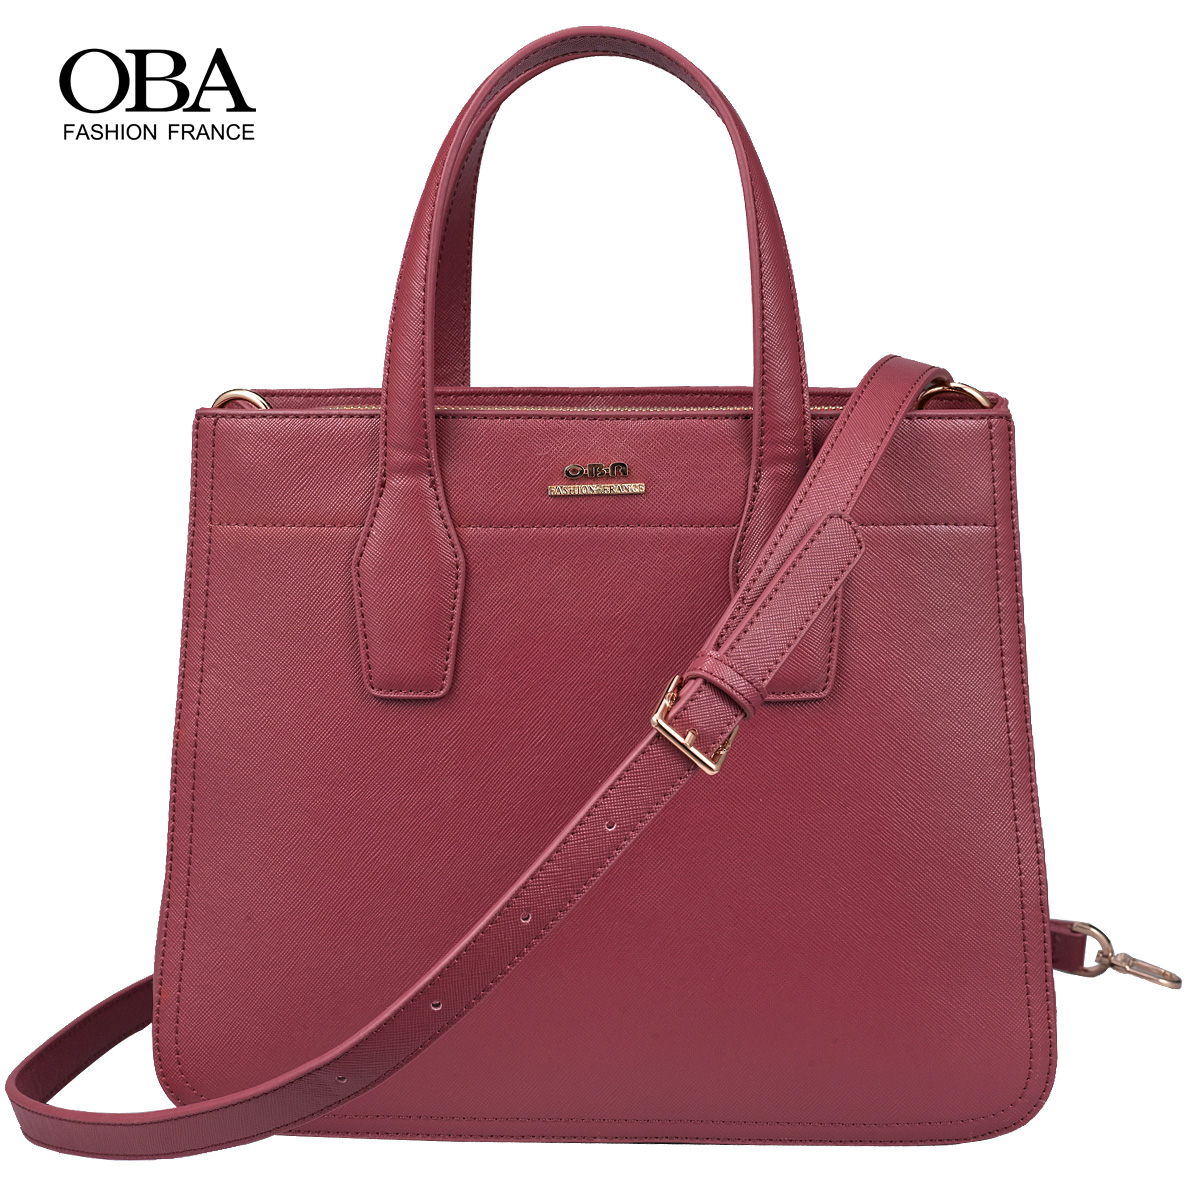 OBA女包2014夏季新款 纯色欧美时尚潮流女包吸扣双拉链专柜正品